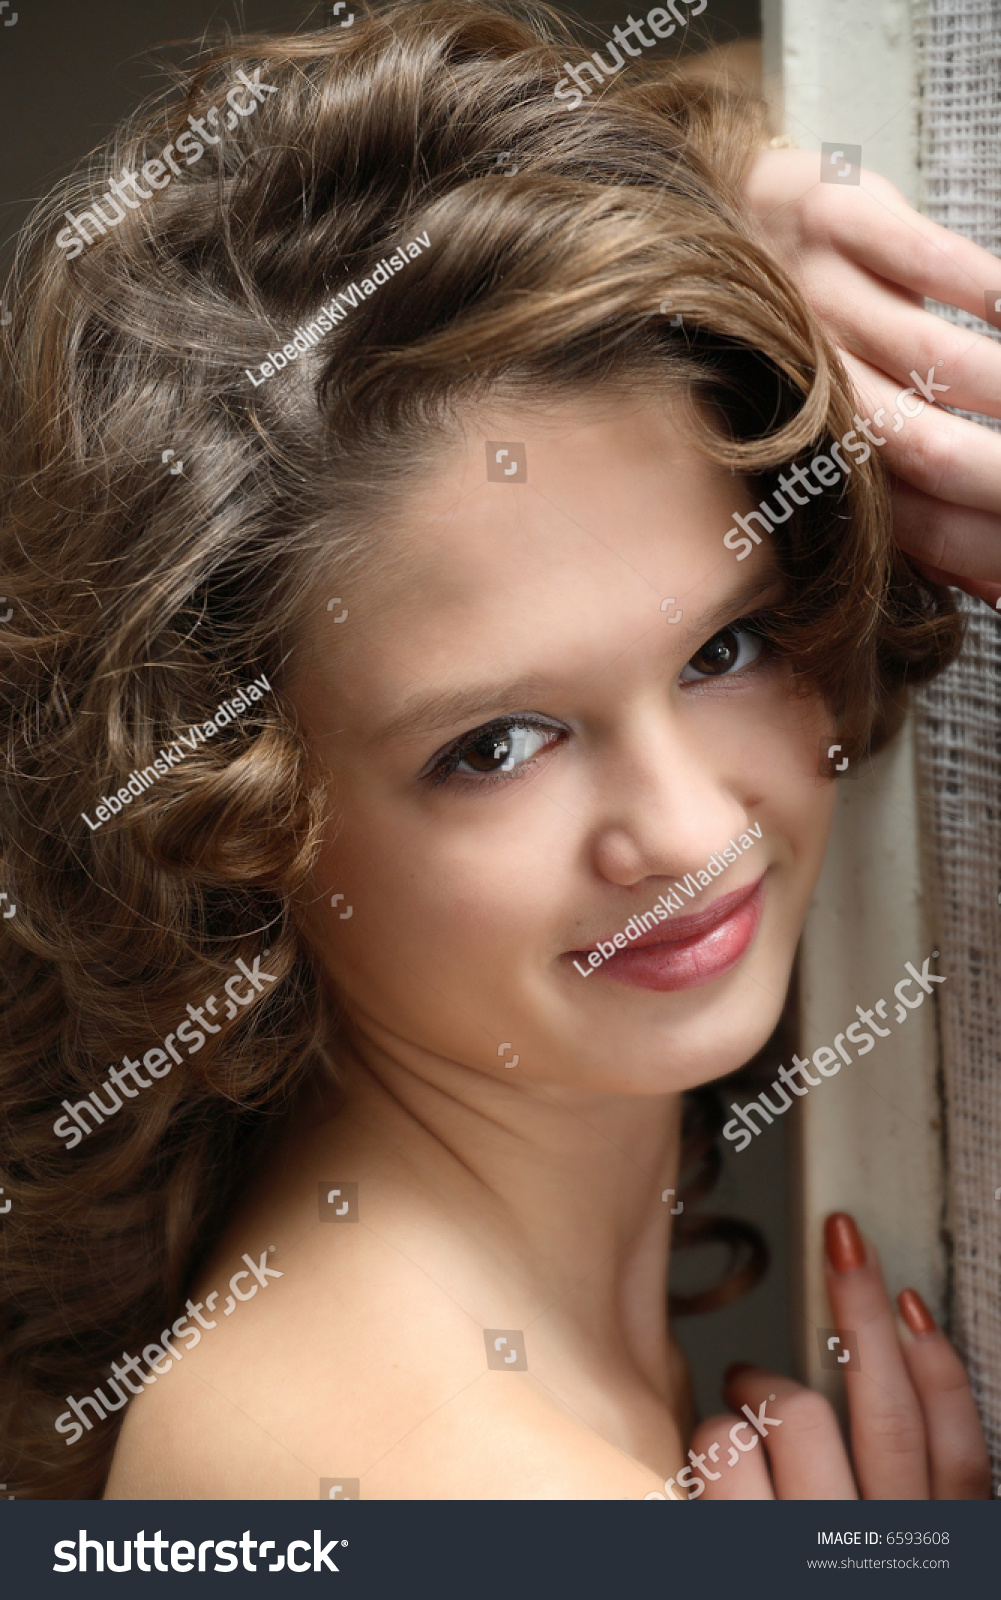 Beautiful Teen Girl With Brown Curly Hair Looking O